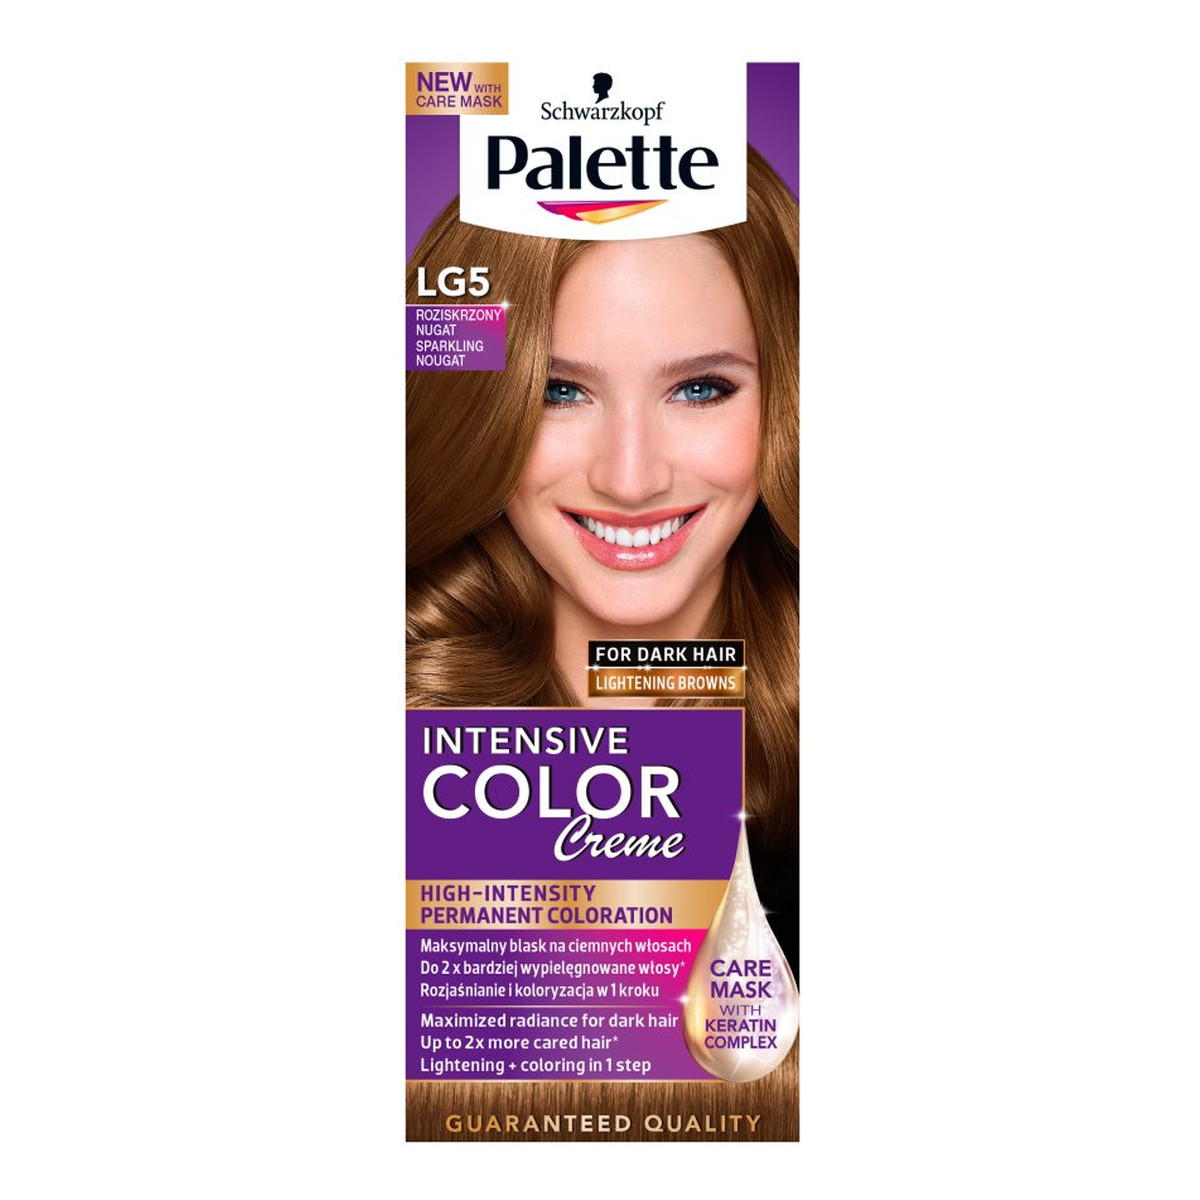 Palette Intensive Color Creme Krem Koloryzujący